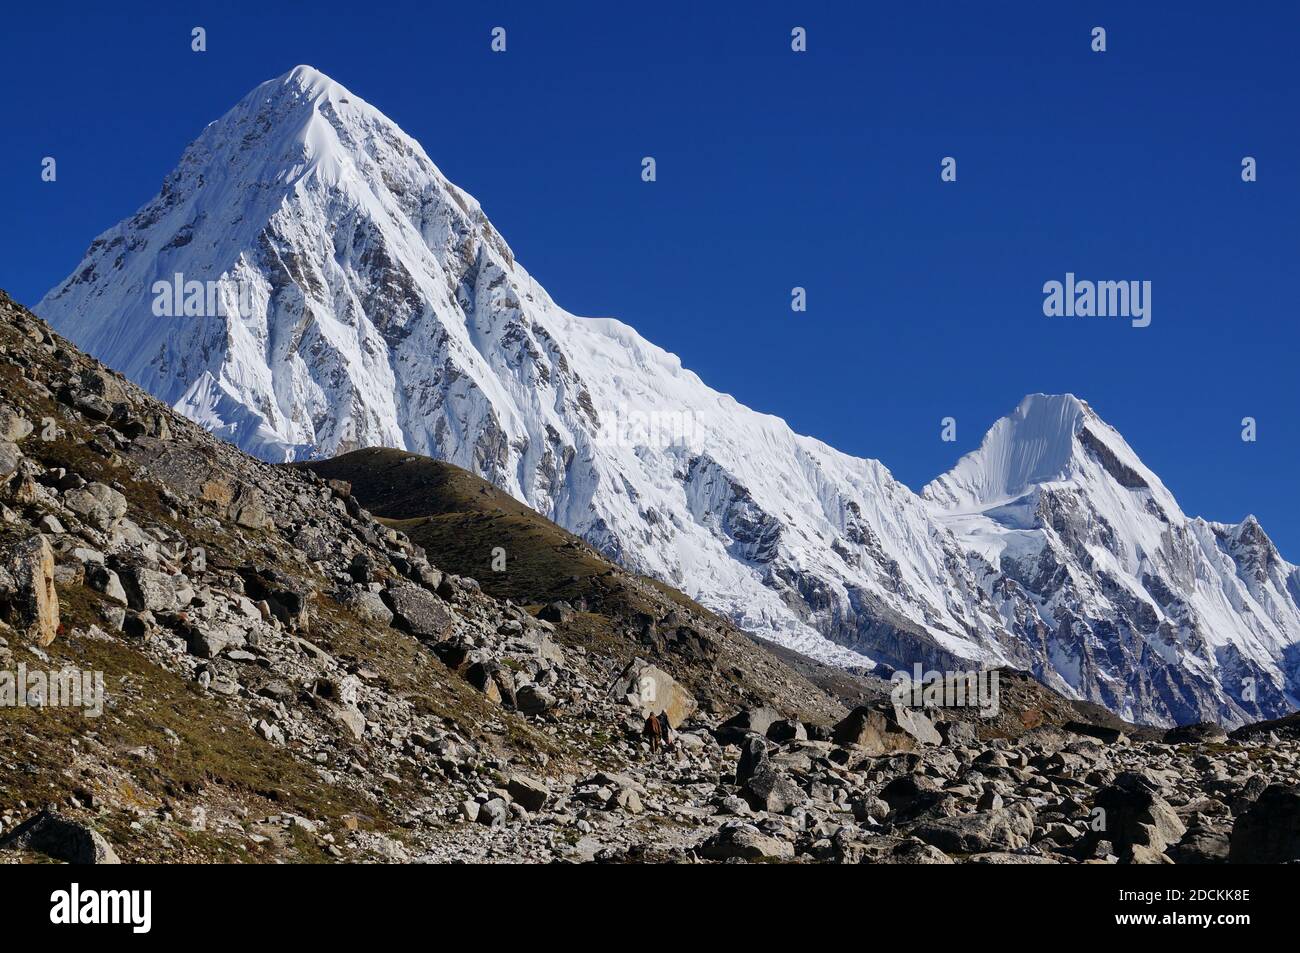 Vista sulle montagne innevate dell'Himalaya. Trekking EBC - Everest base Camp. Foto Stock